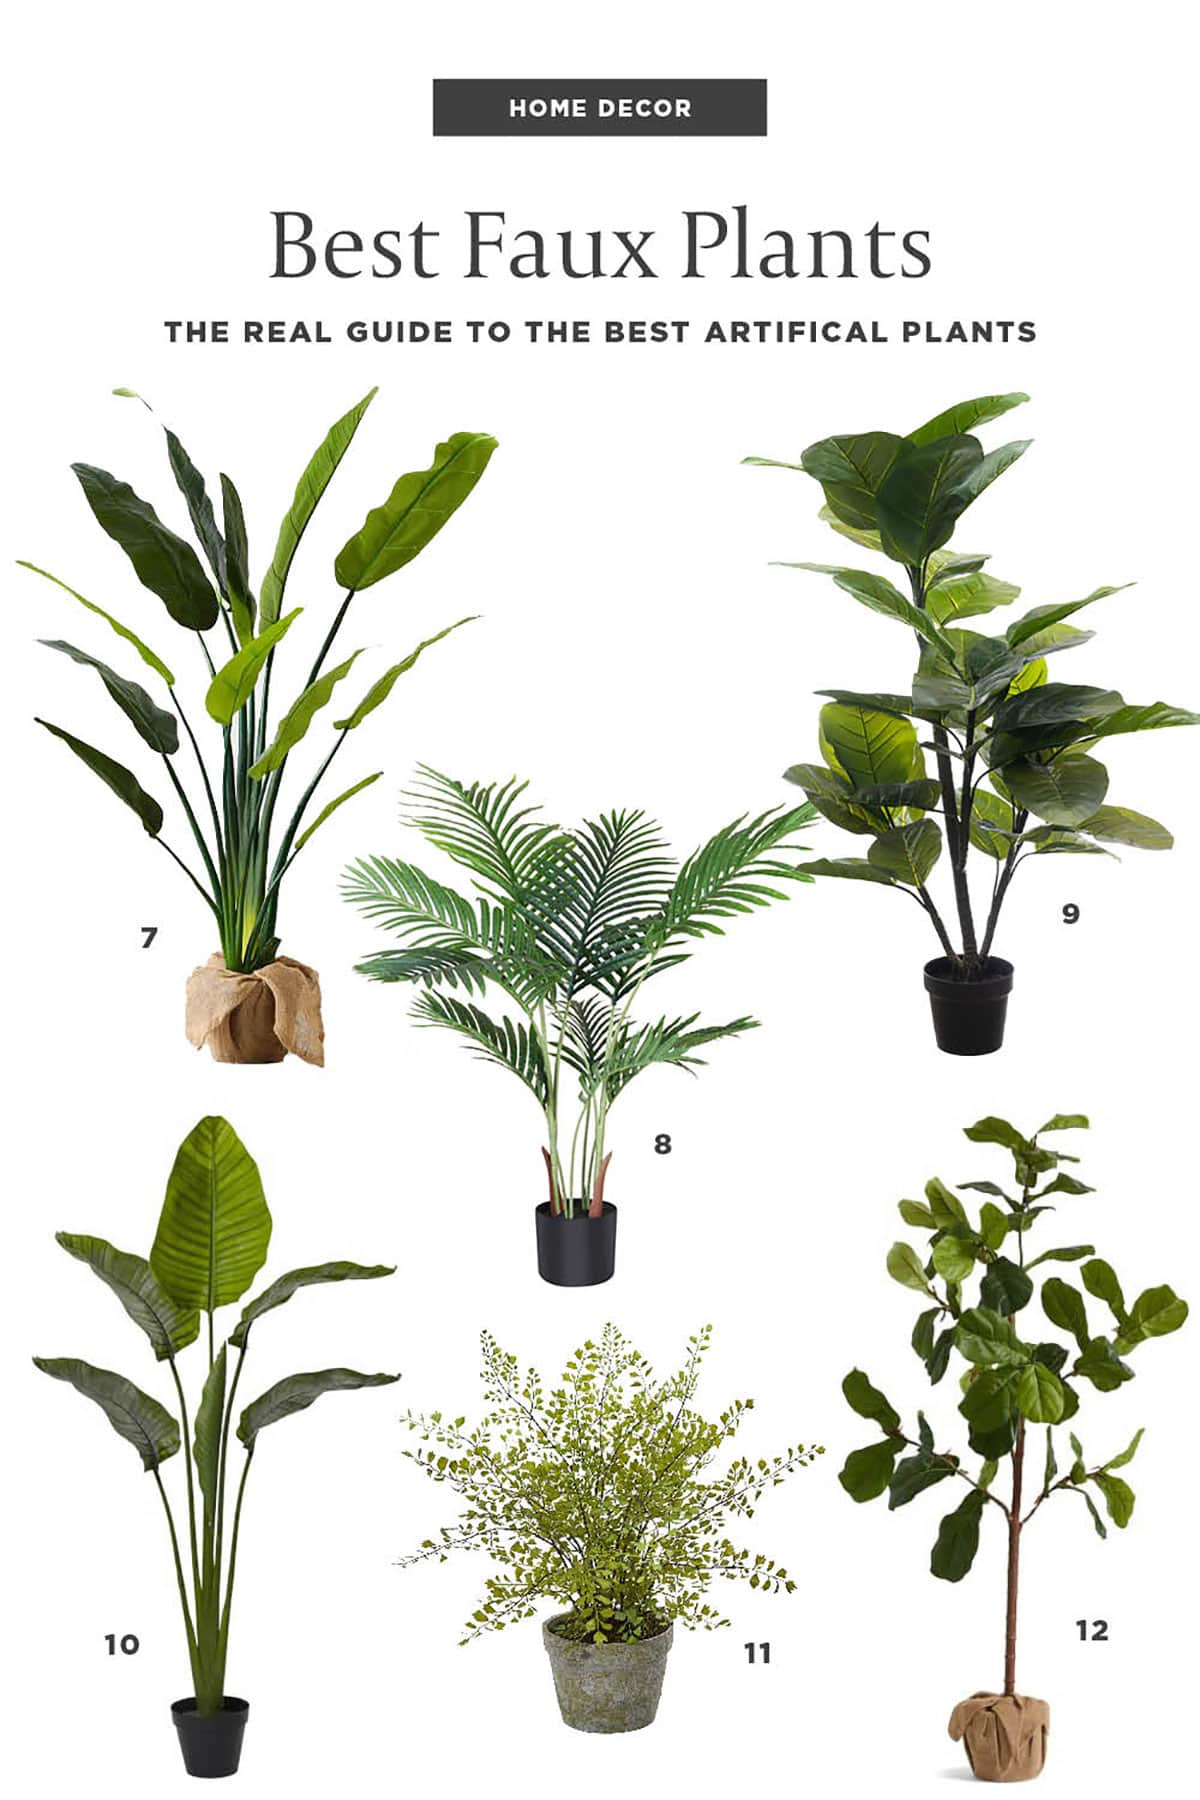 An Easier Way to Dust Silk Plants - Simple Practical Beautiful